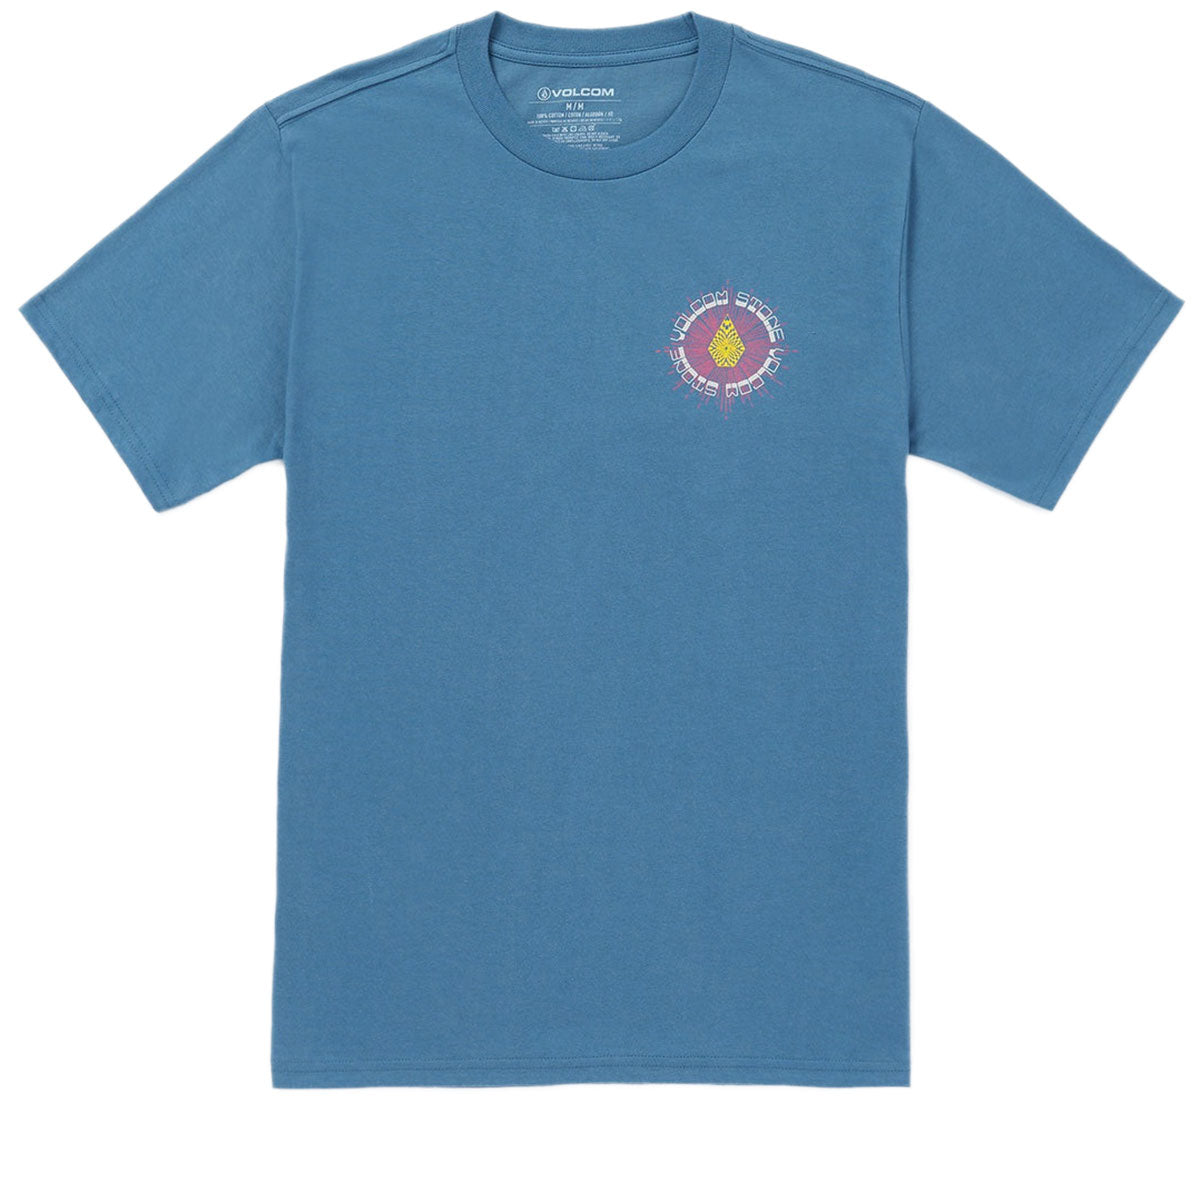 Volcom 1800 Stone T-Shirt - Dark Blue image 2